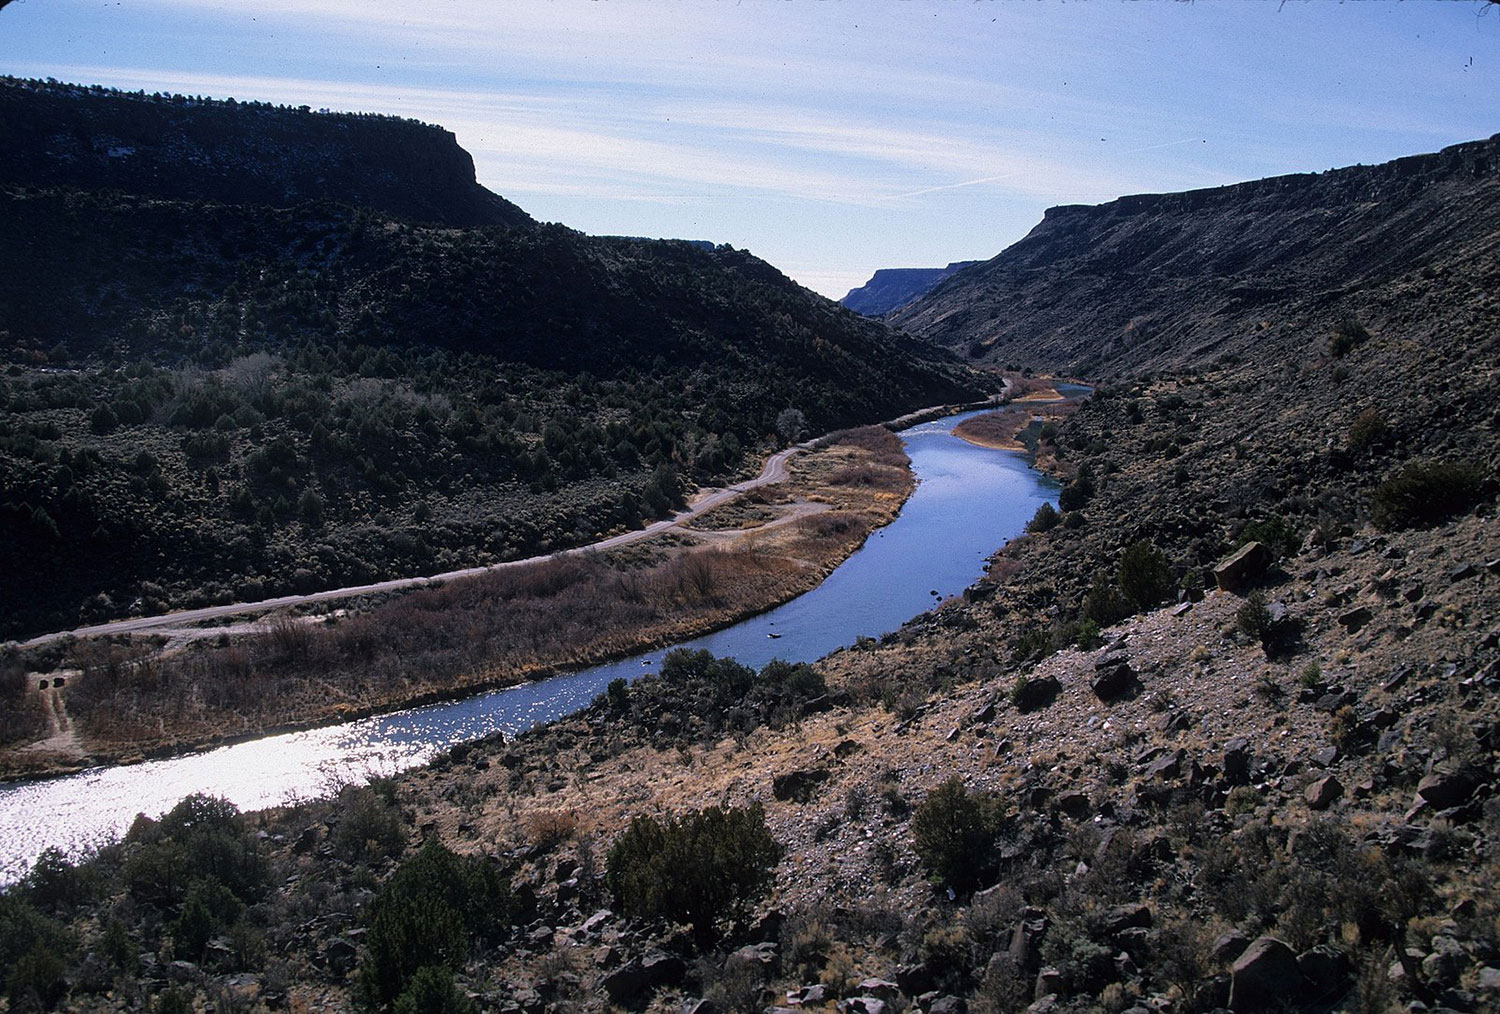 The Rio Chama in New Mexico